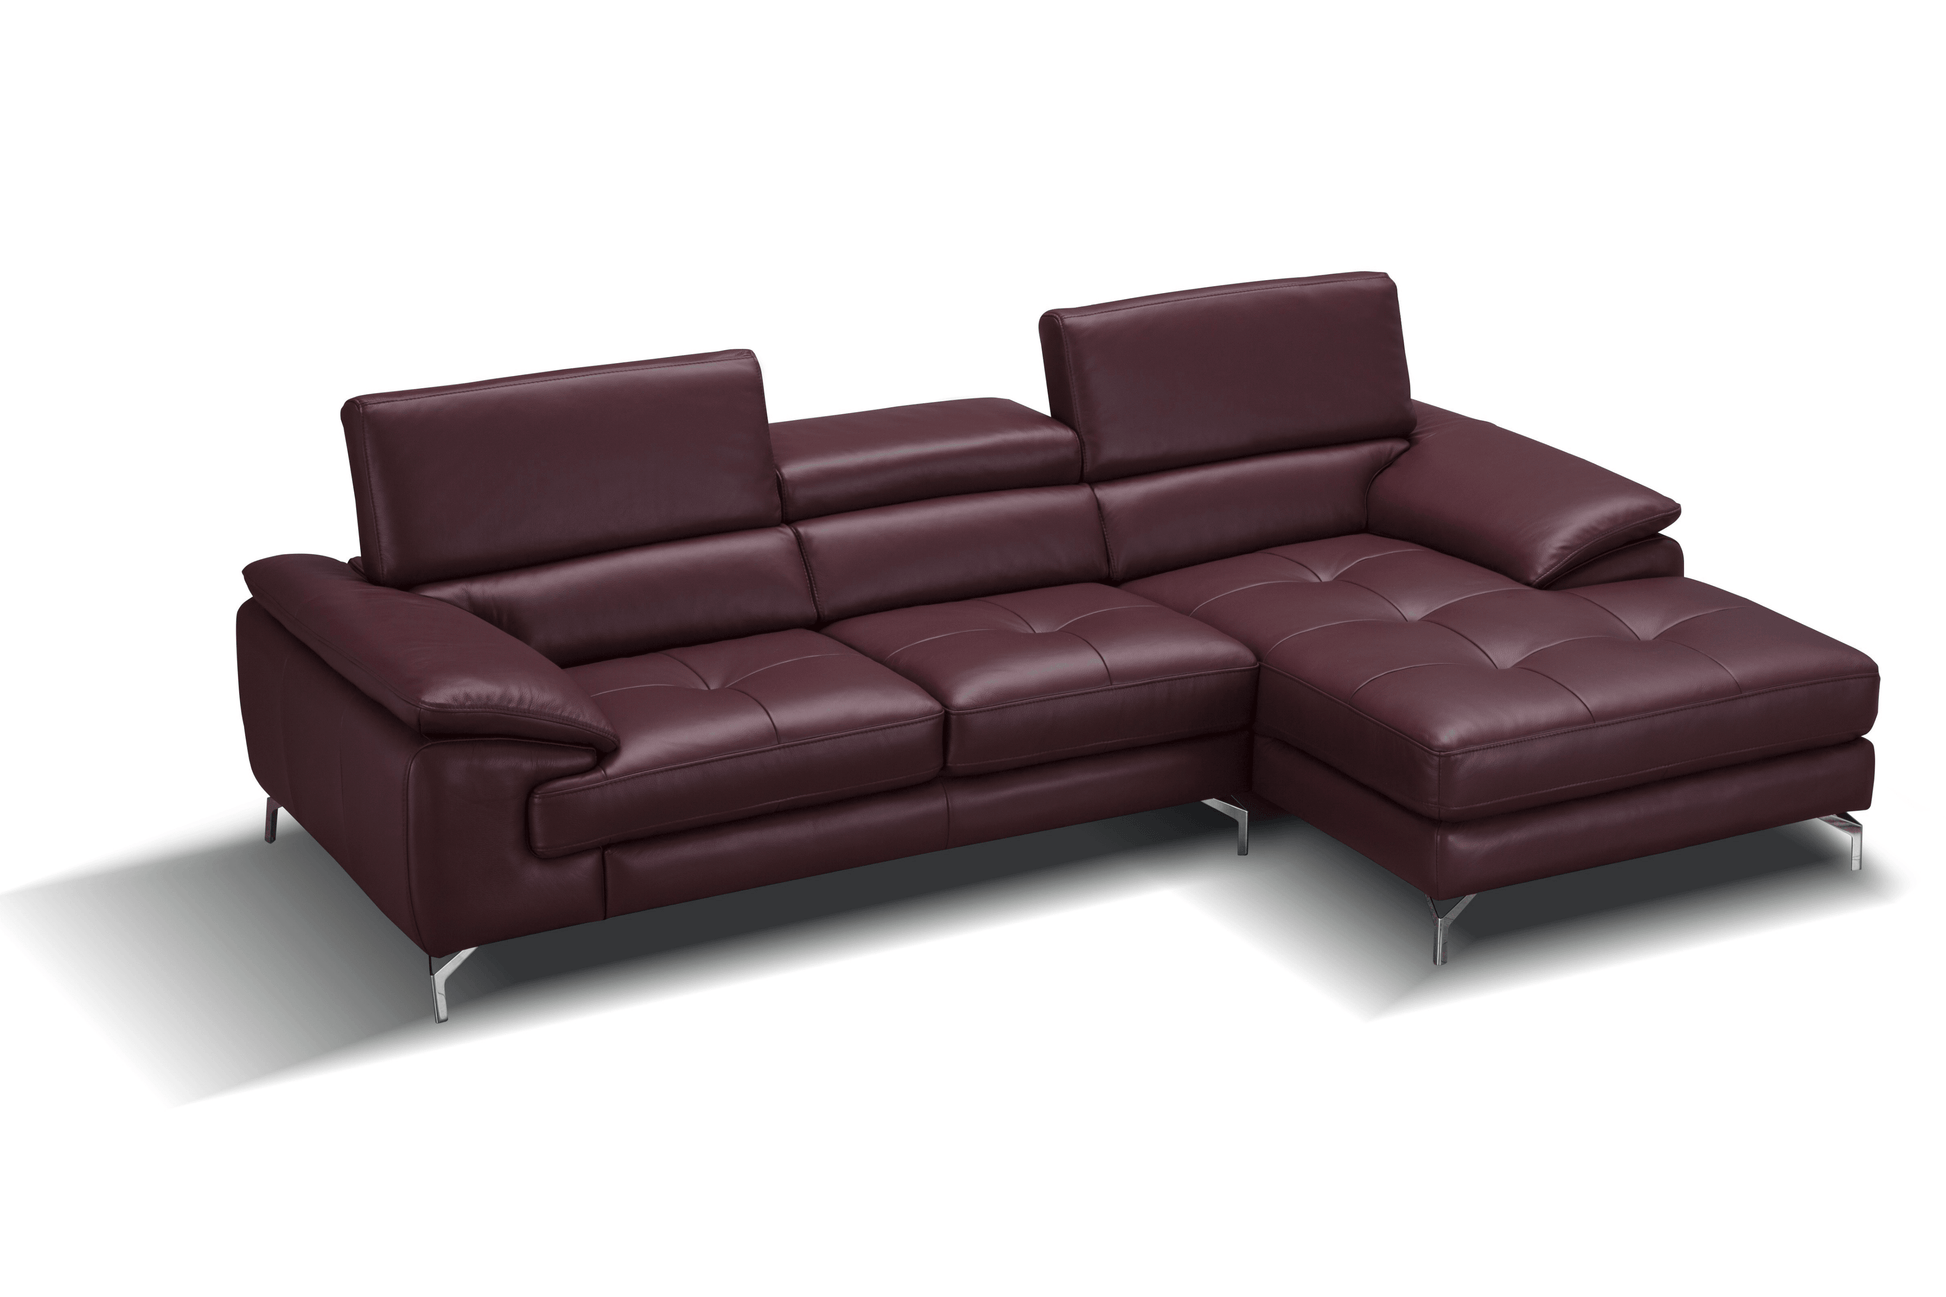 A973b Premium Leather Sectional in Maroon - Venini Furniture 